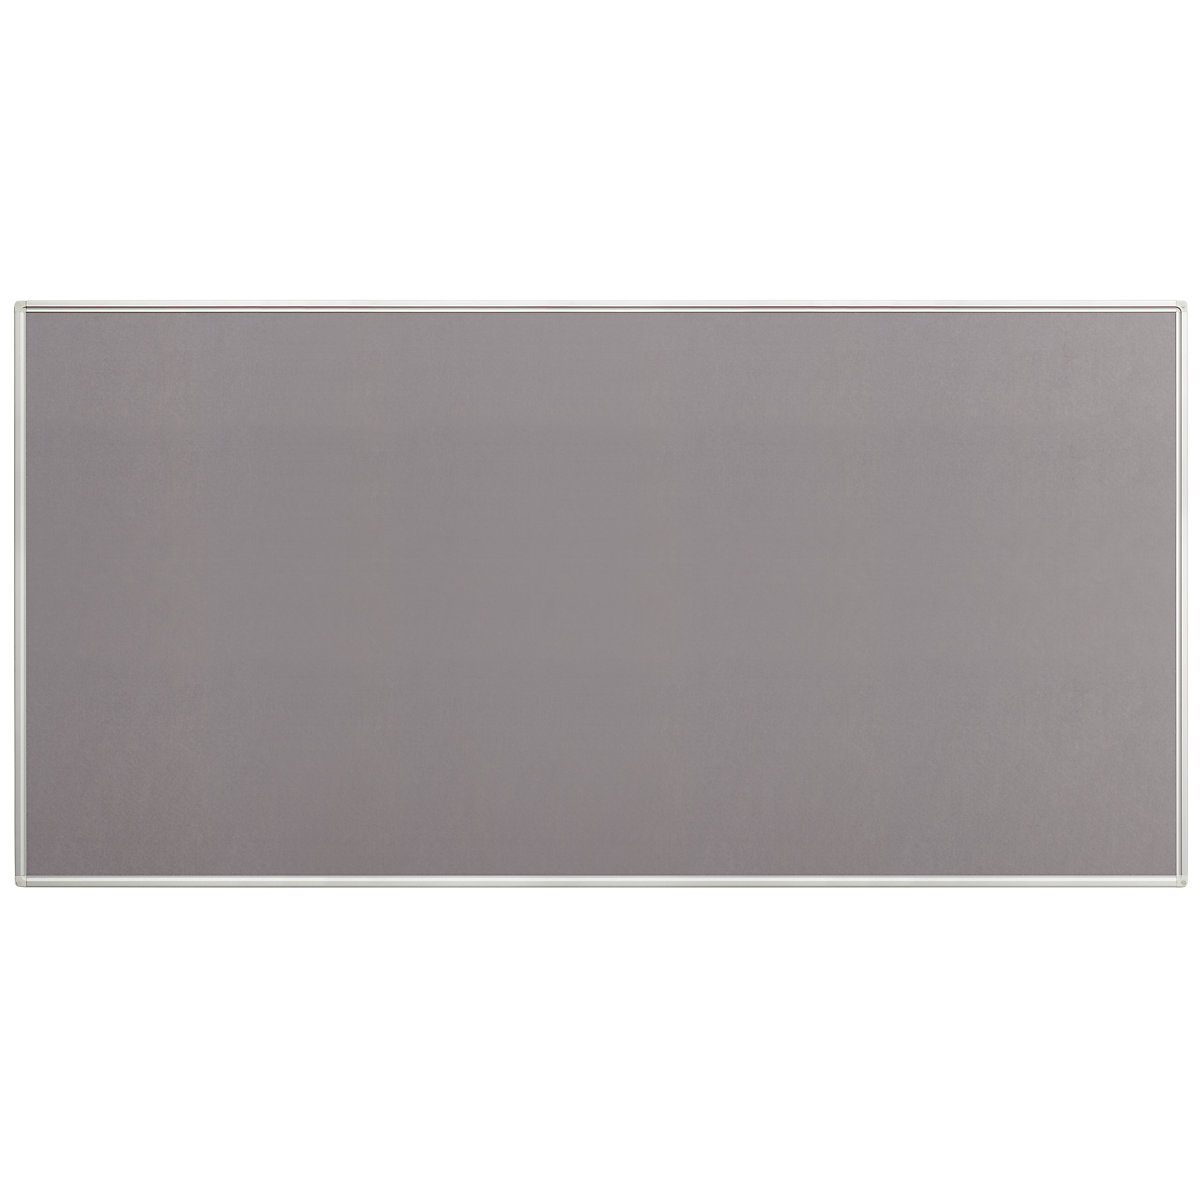 Tablón informativo para alfileres, fieltro gris, A x H 2000 x 1000 mm-5